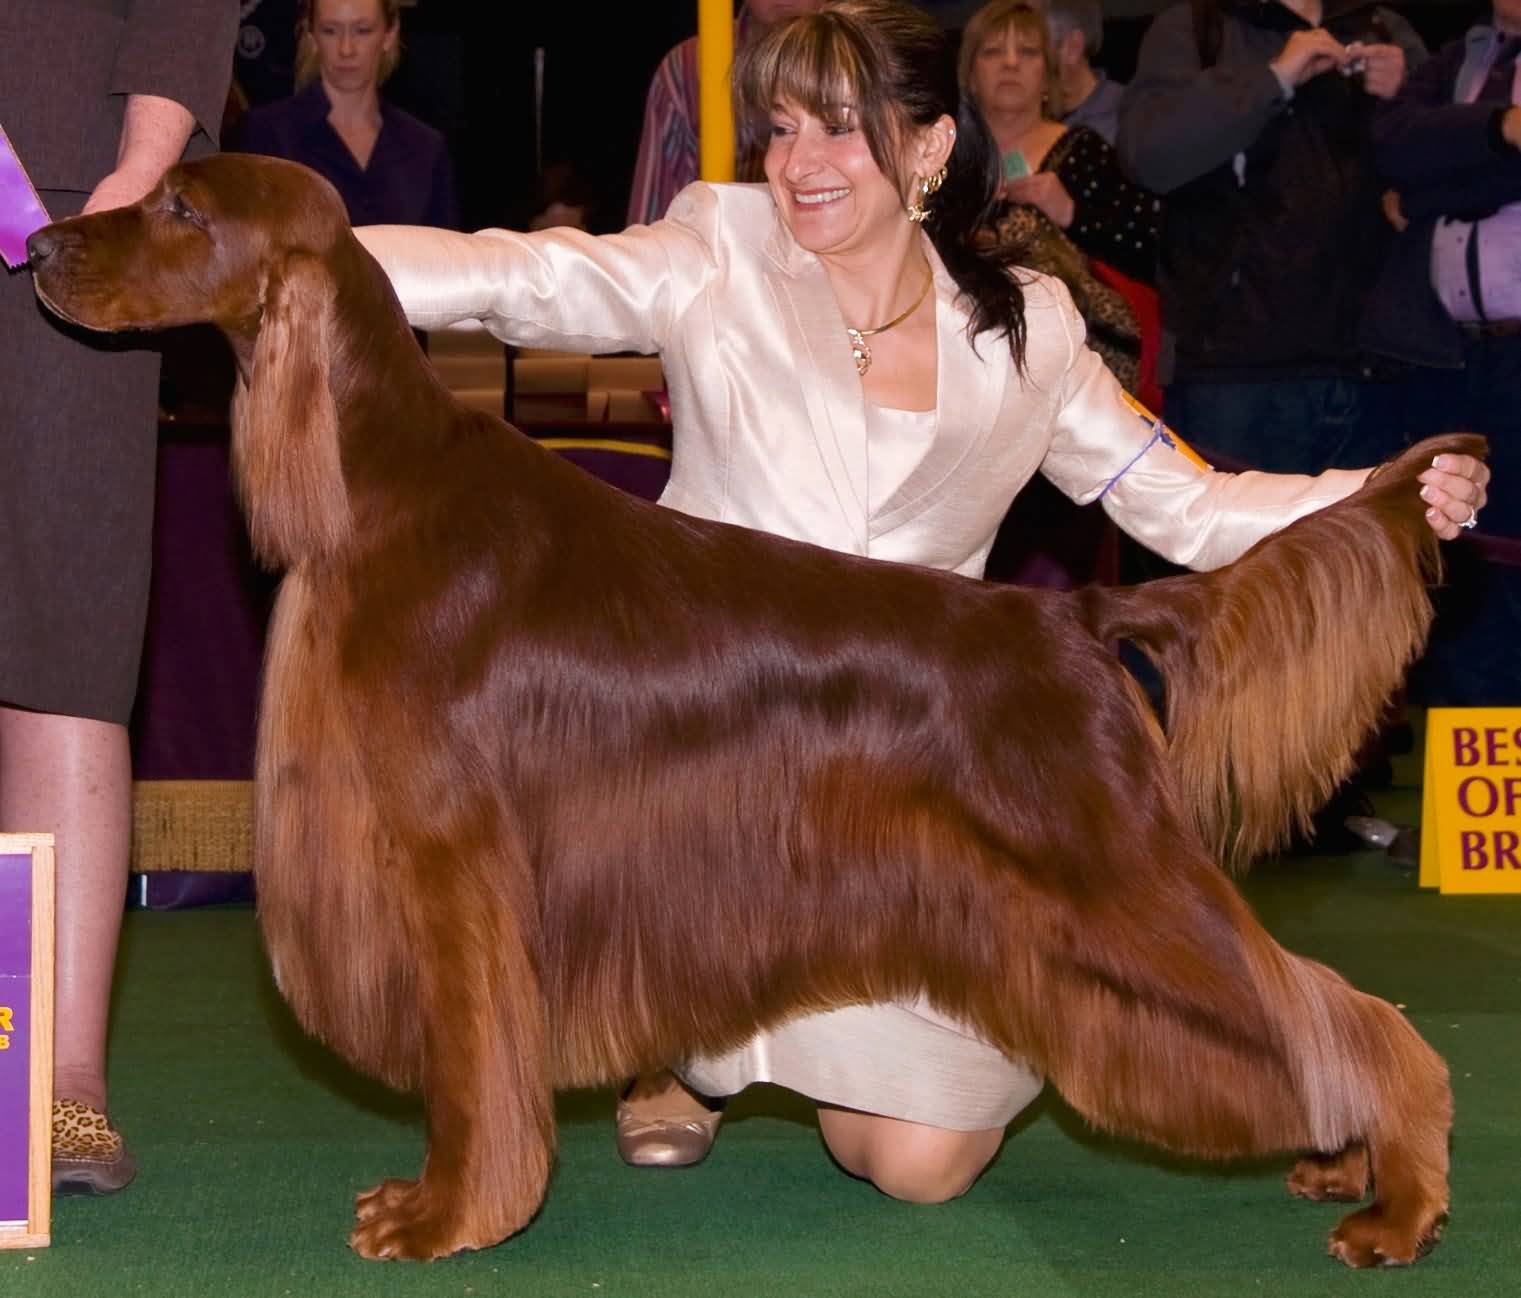 Irish Setter Dog With Long Silky Hair In Dog Show